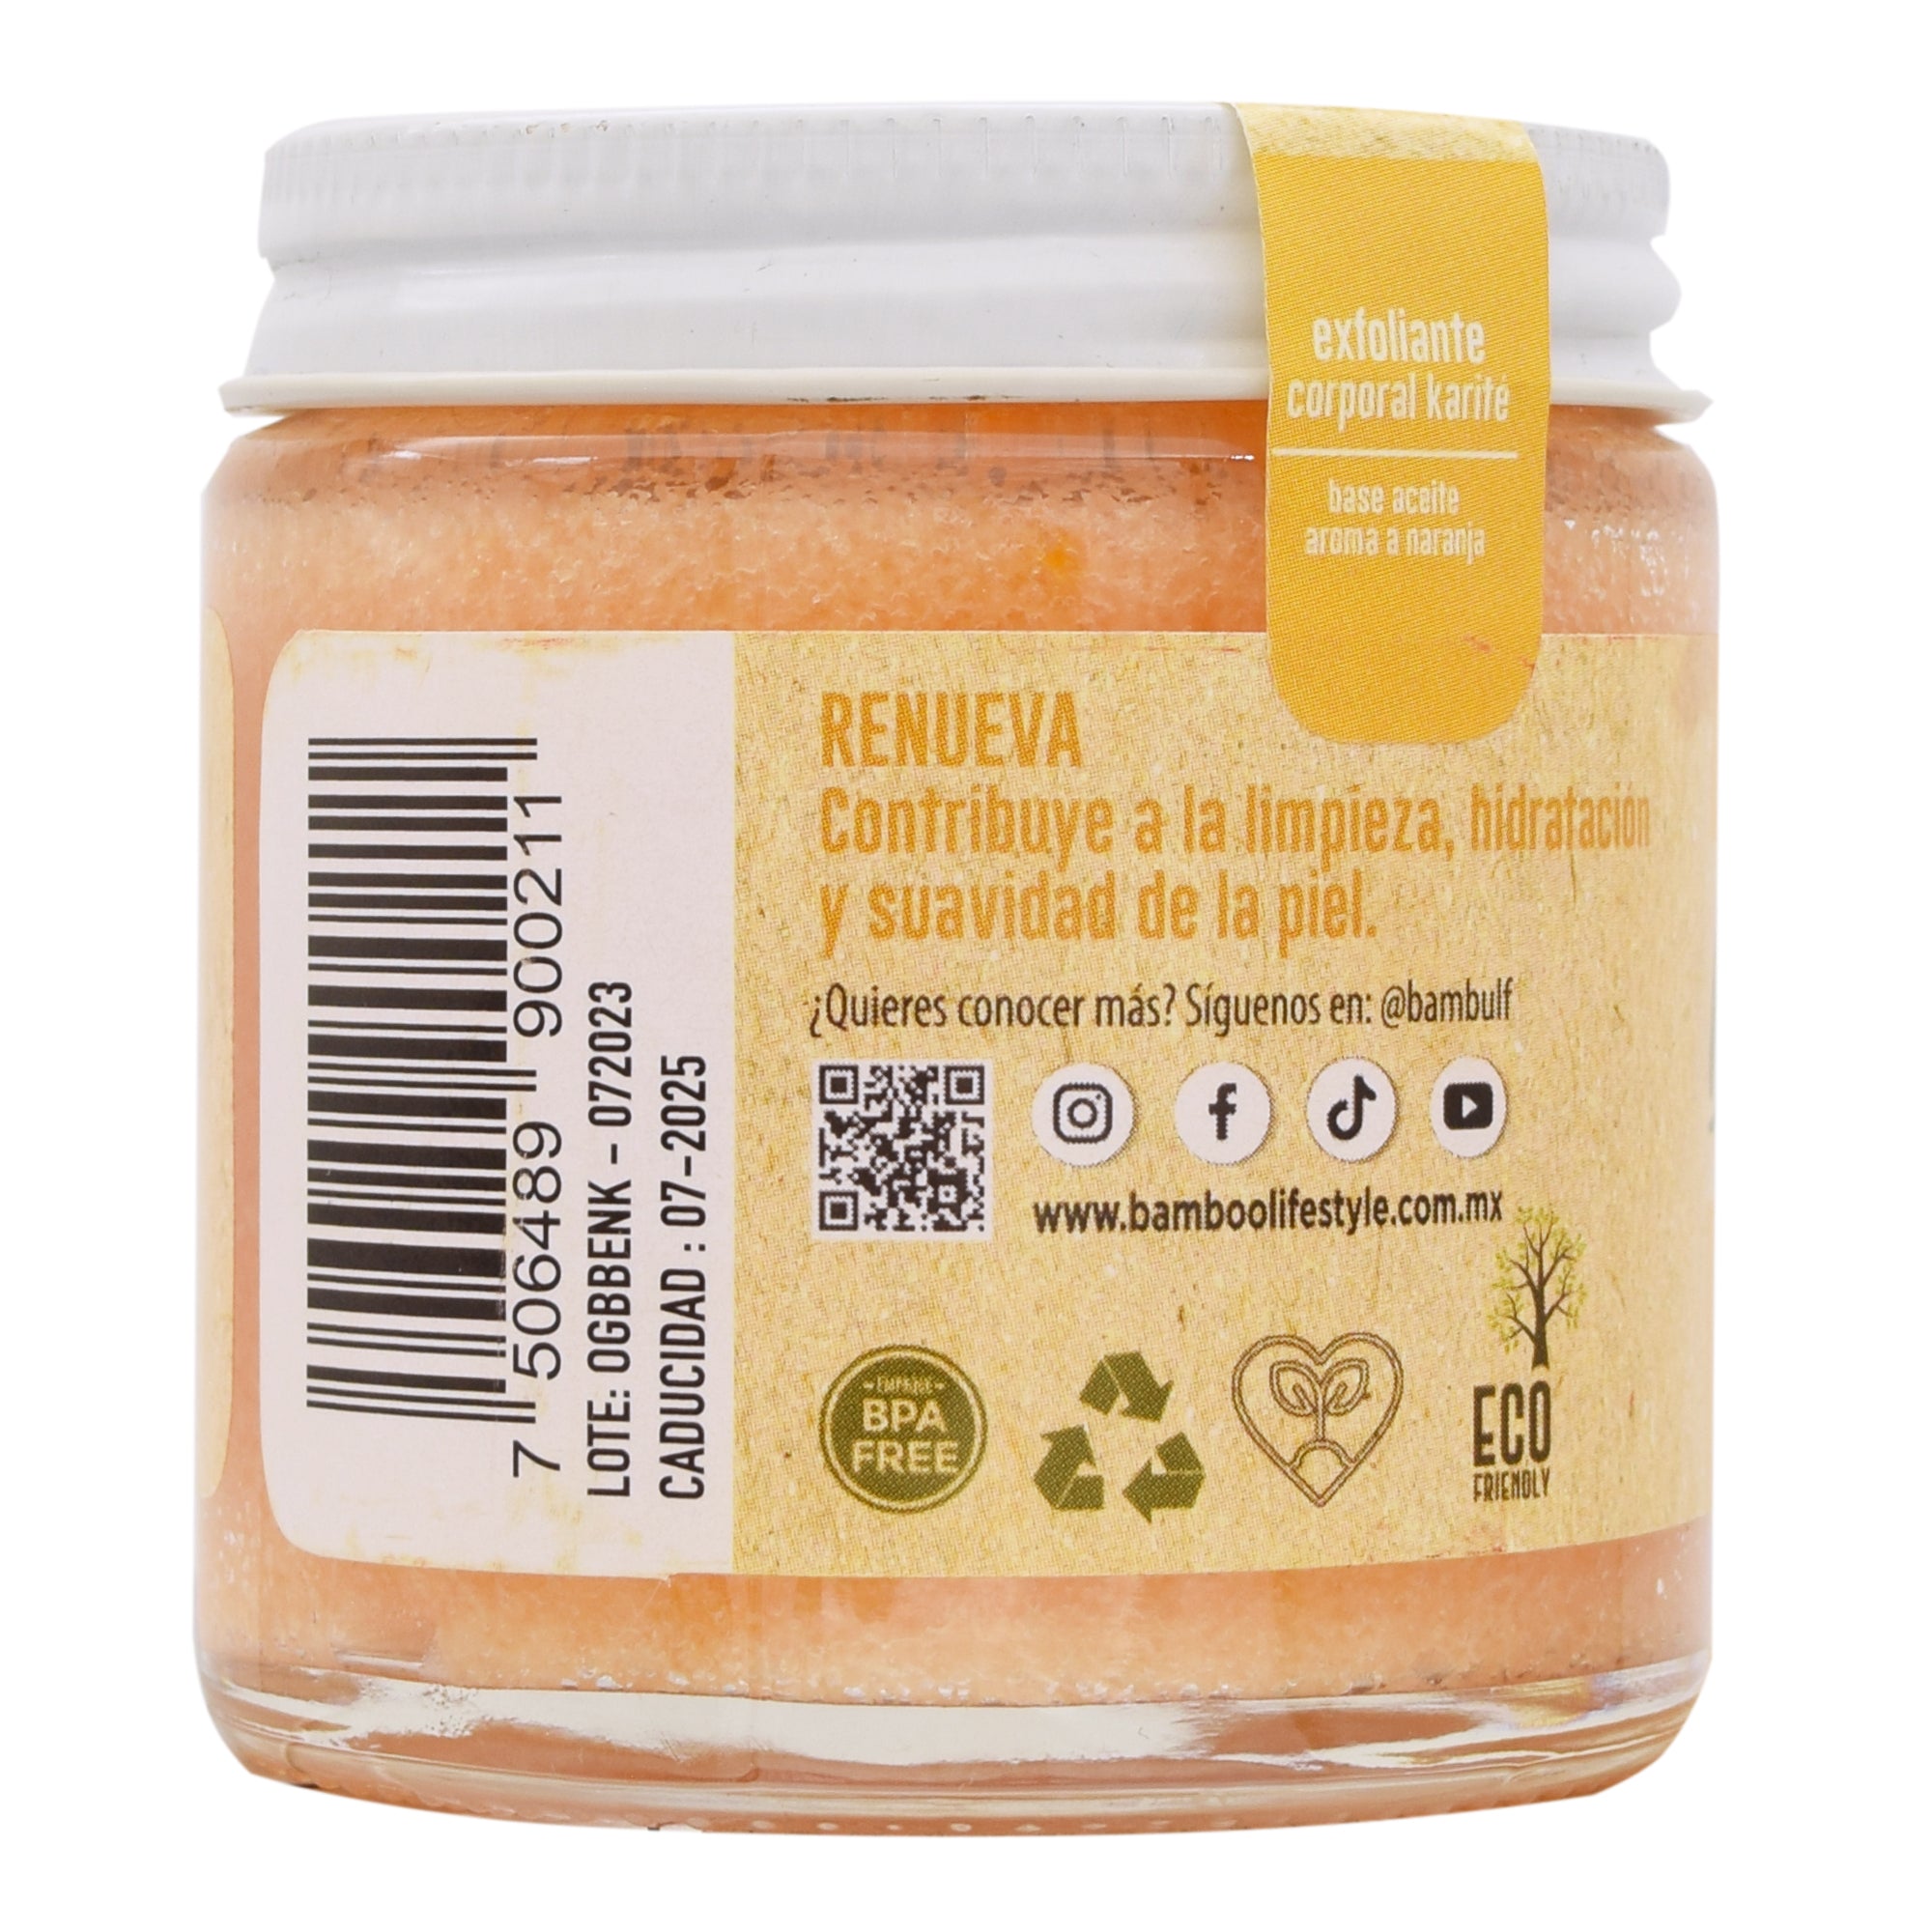 Exfoliante corporal karite naranja 100 g